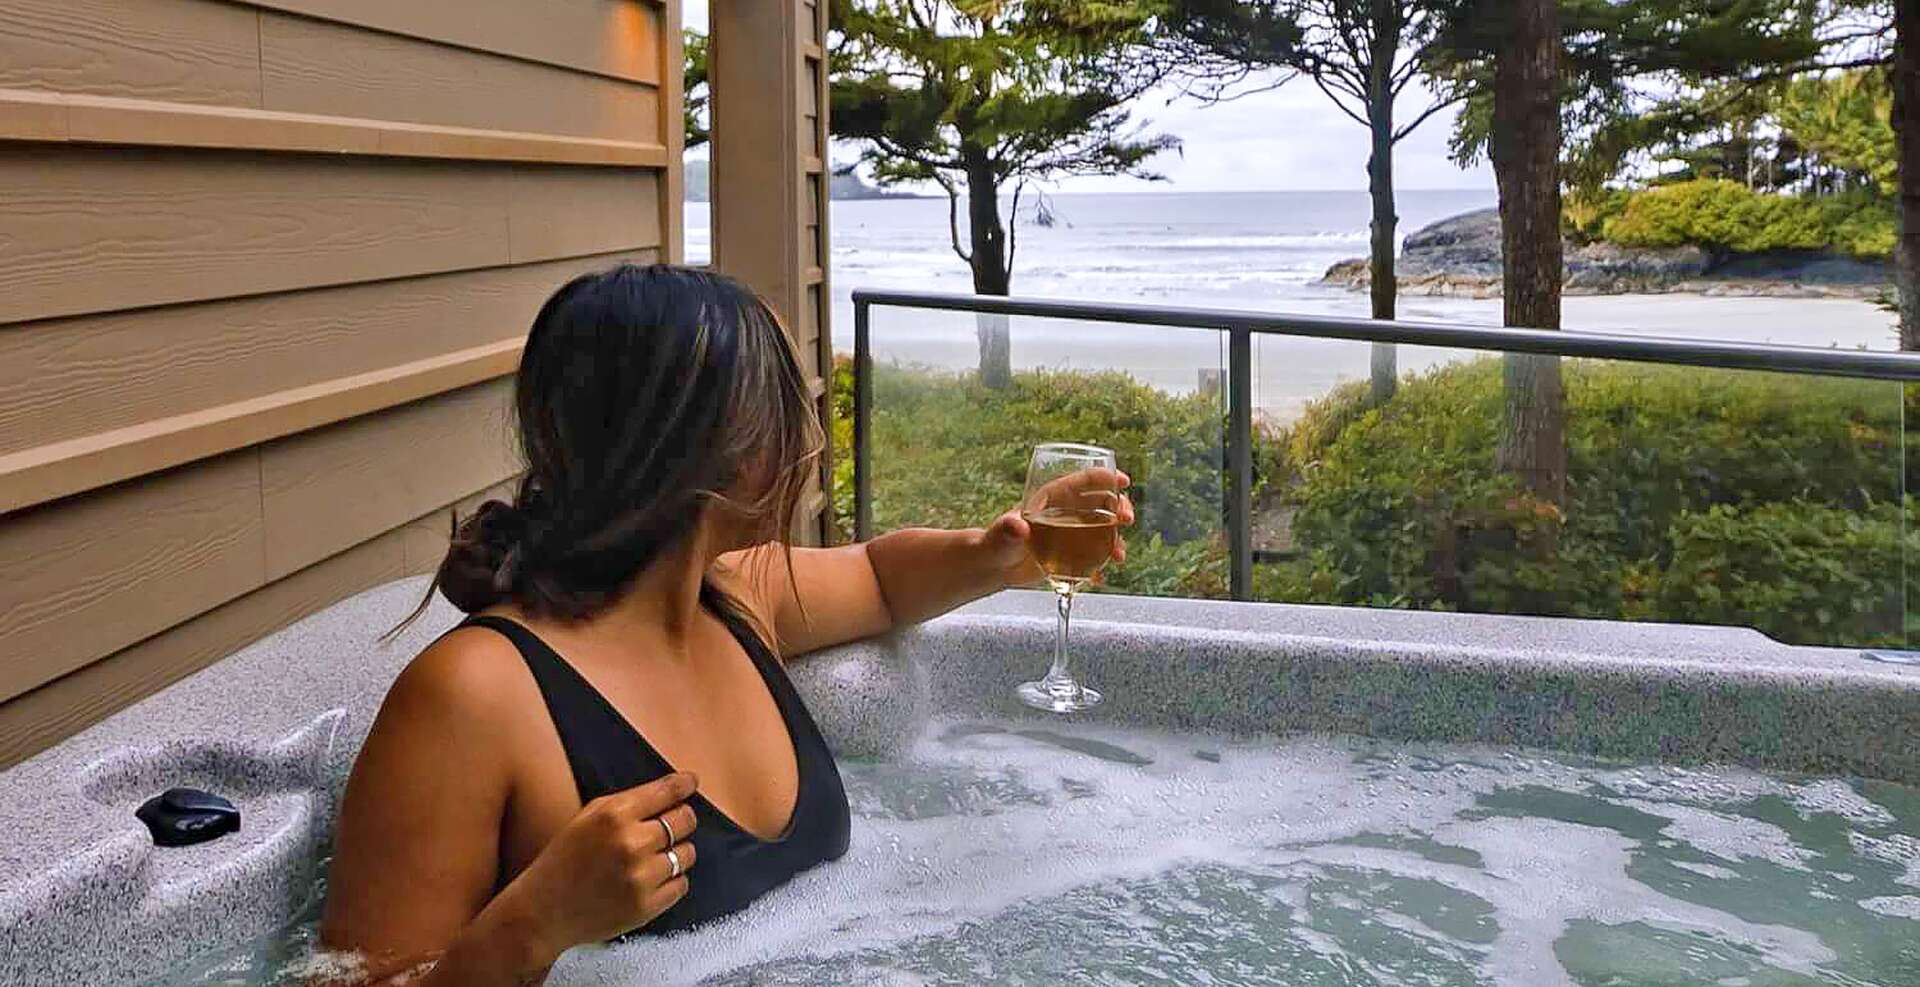 Girl in hot tub with beverage enjoying the ocean views.